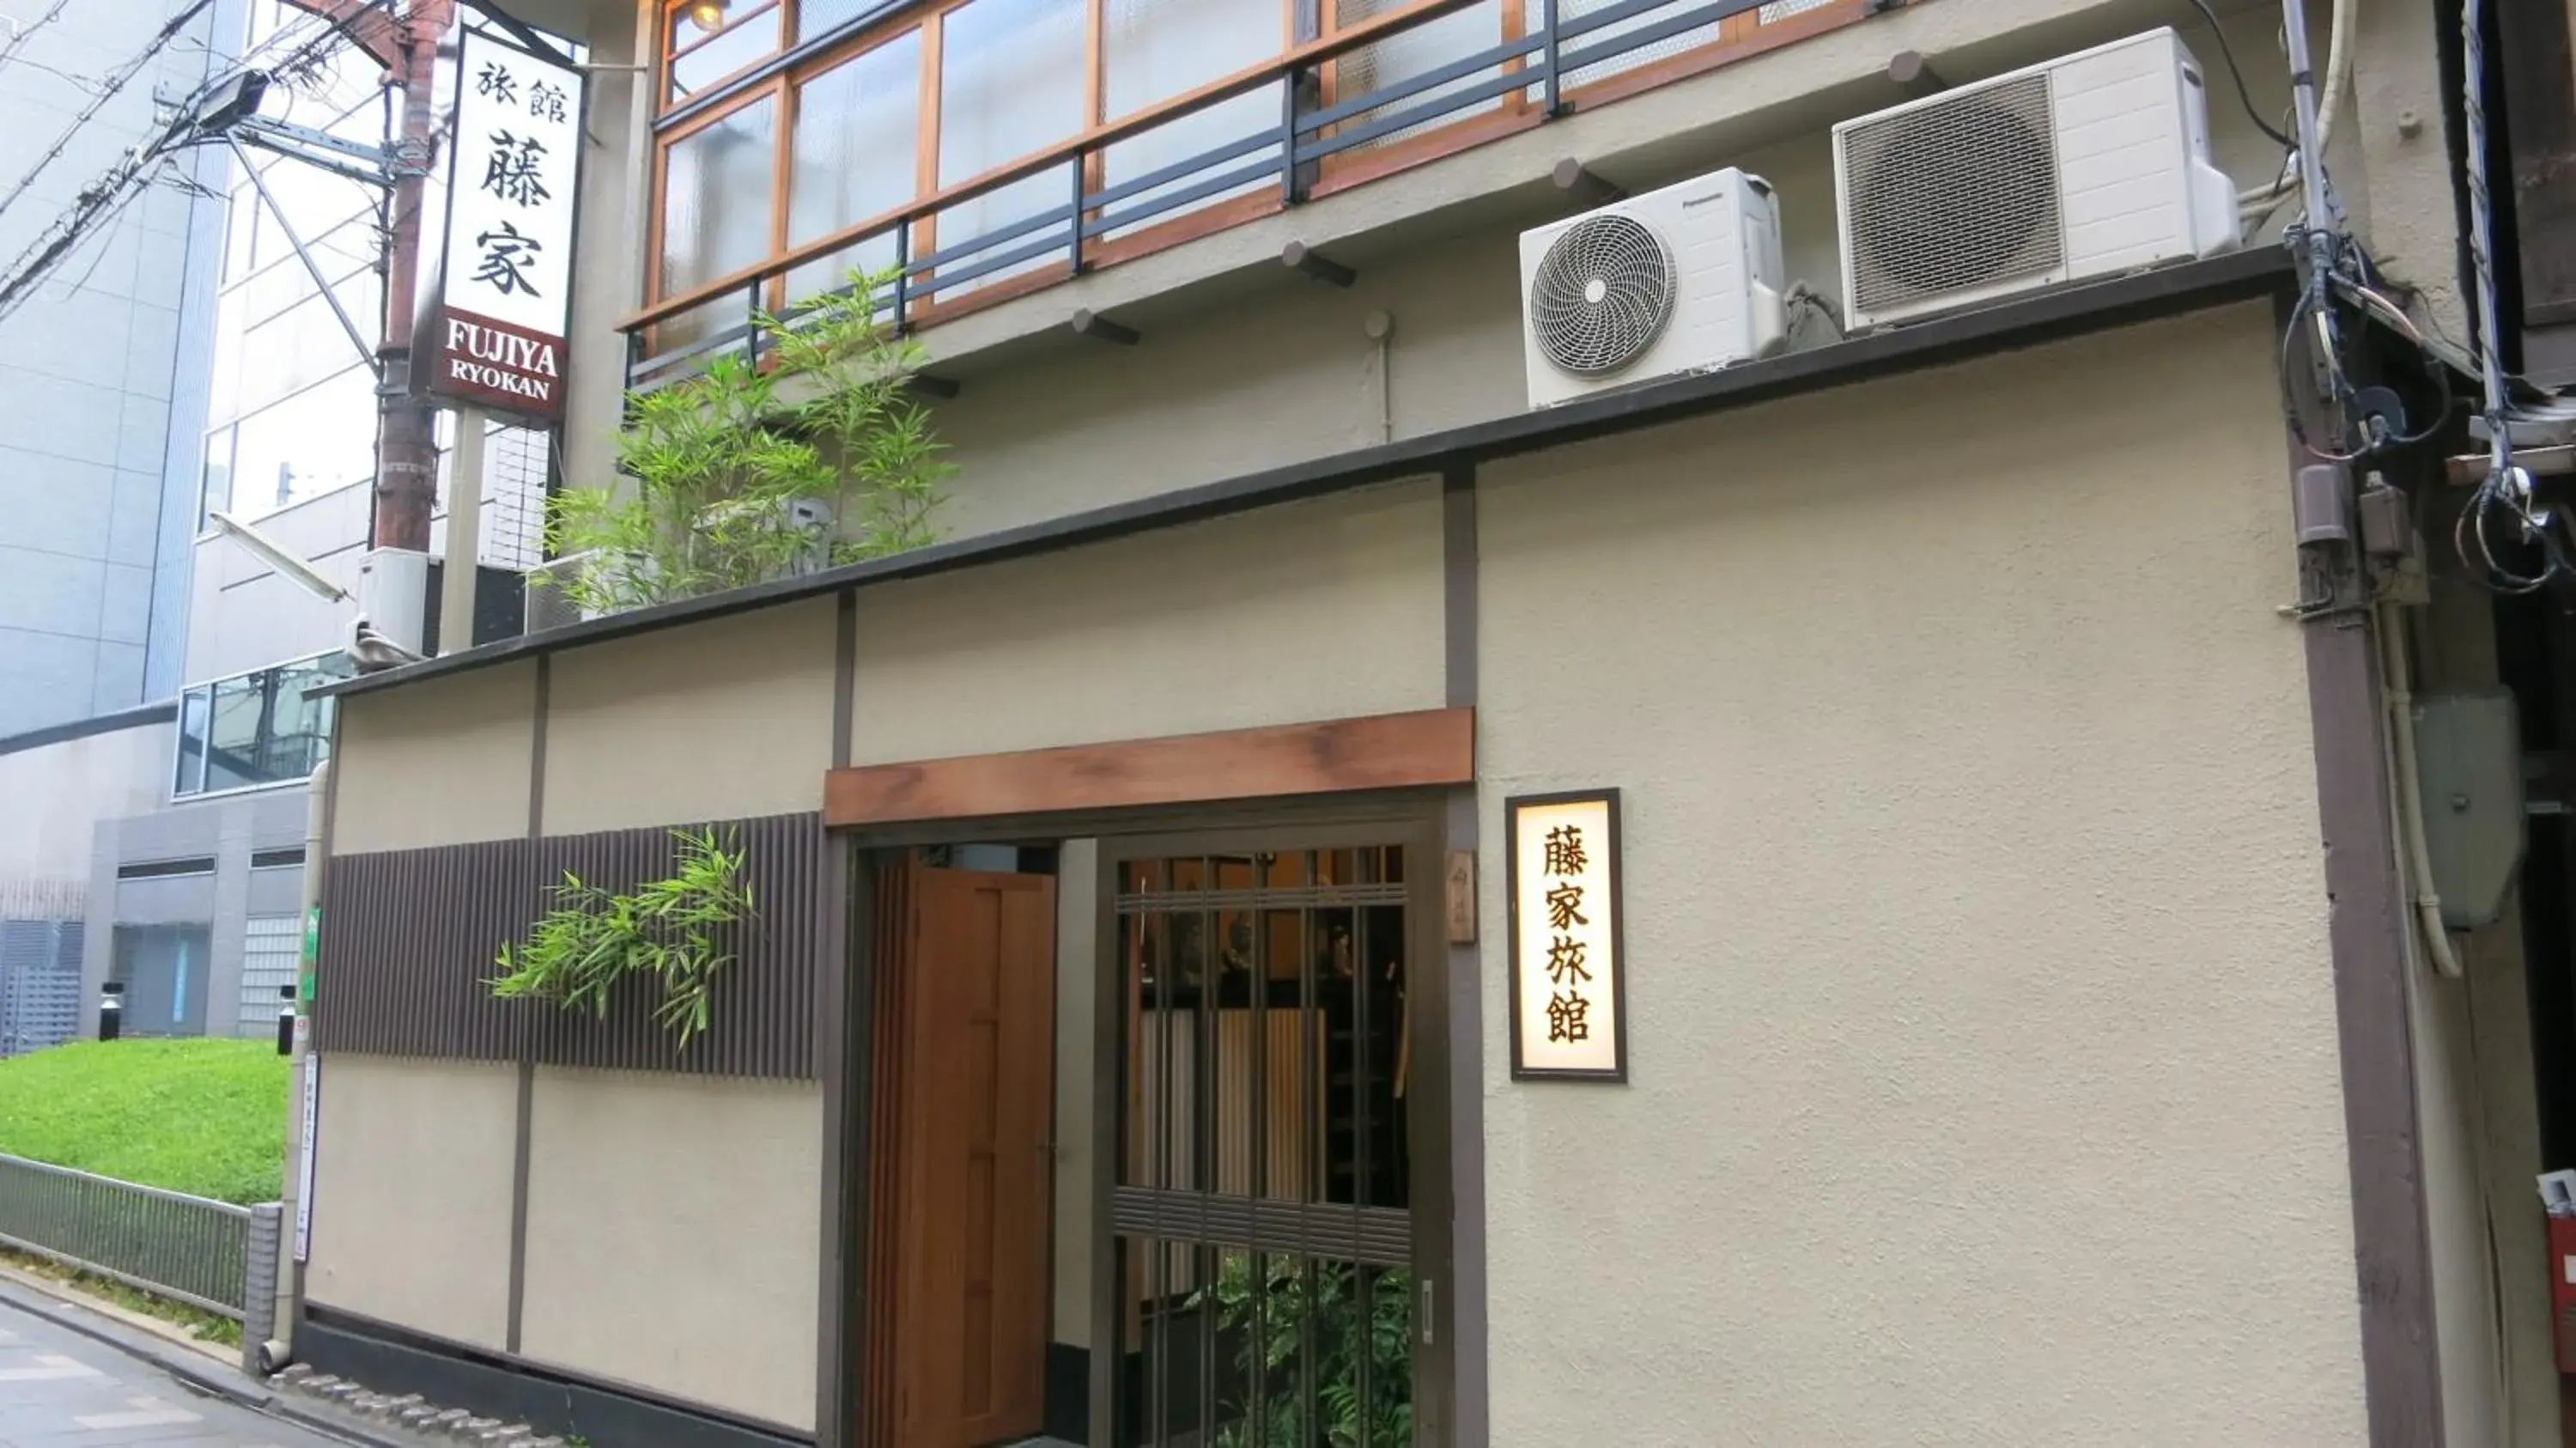 Property building in Fujiya Ryokan